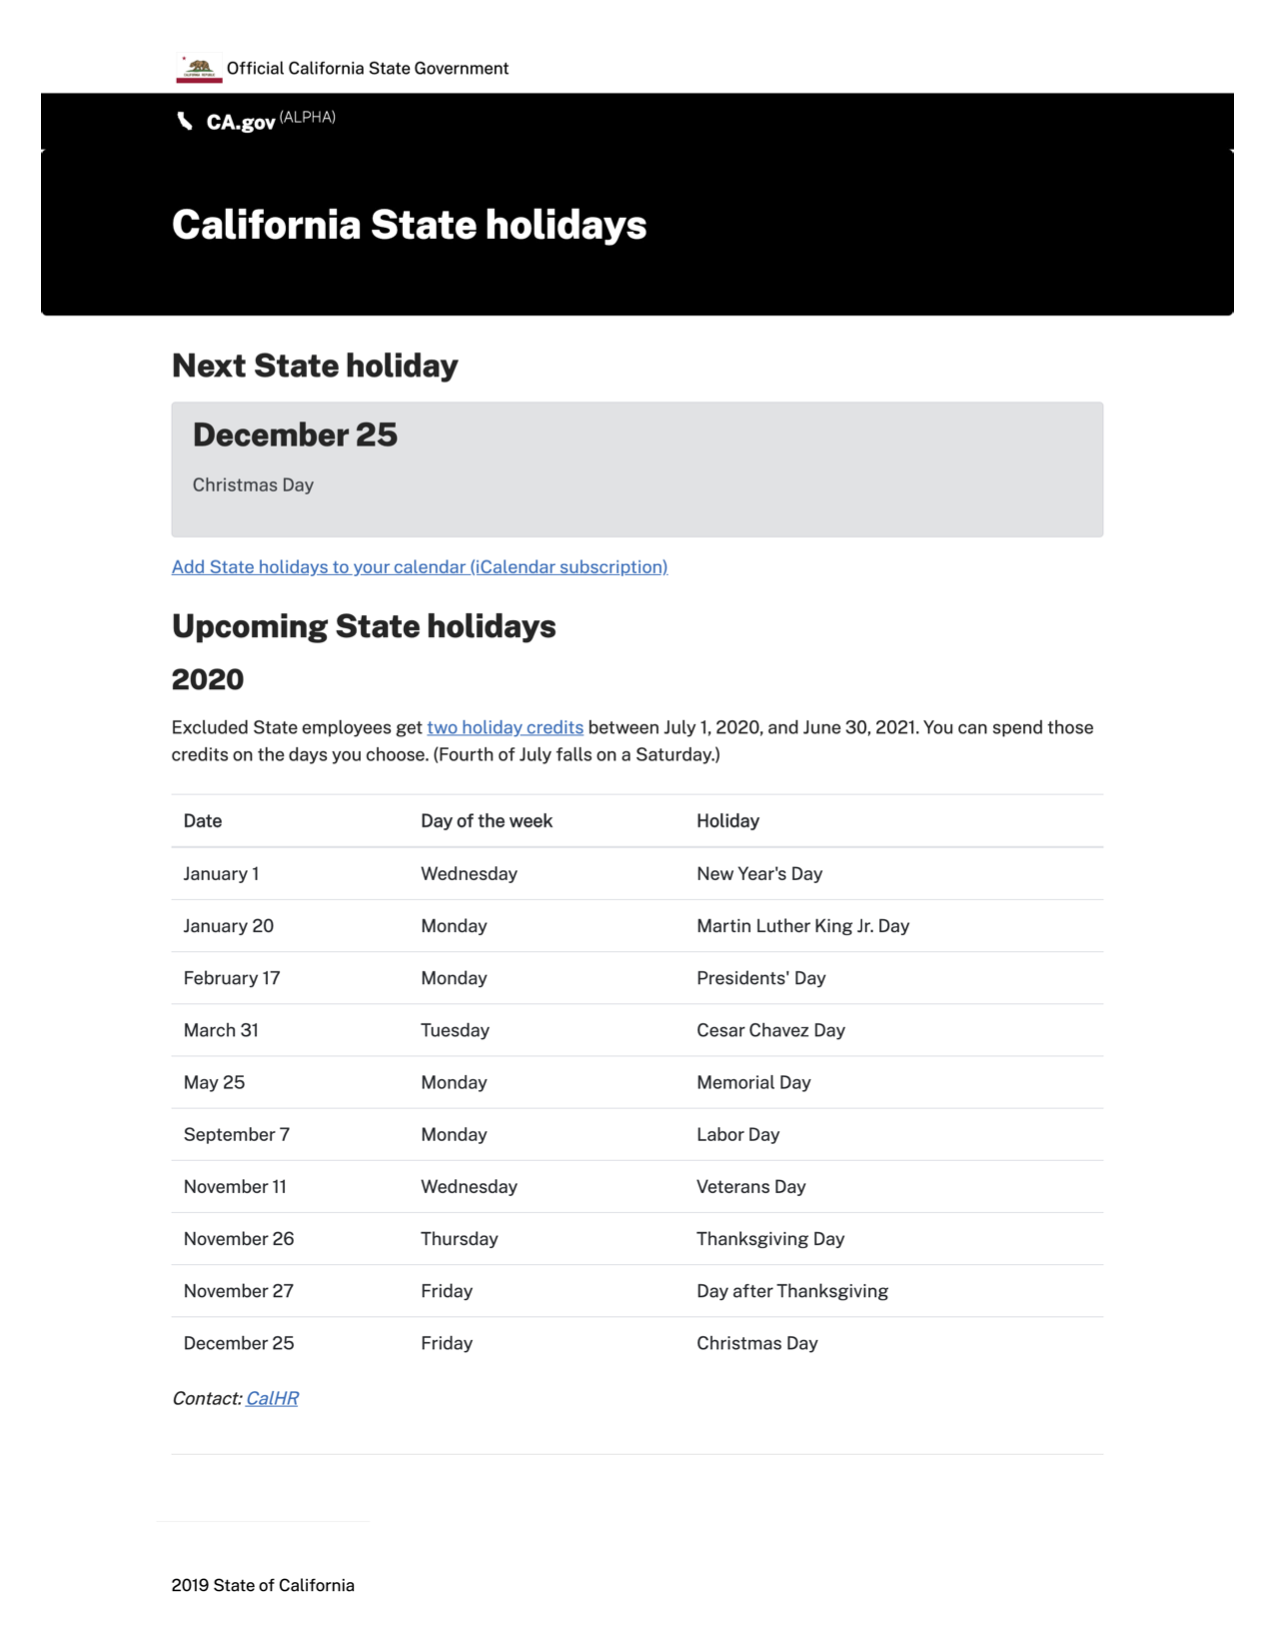 Screenshot of the current CA.gov “Screenshot of Alpha.CA.gov design prototype for “Find official California state holidays.”